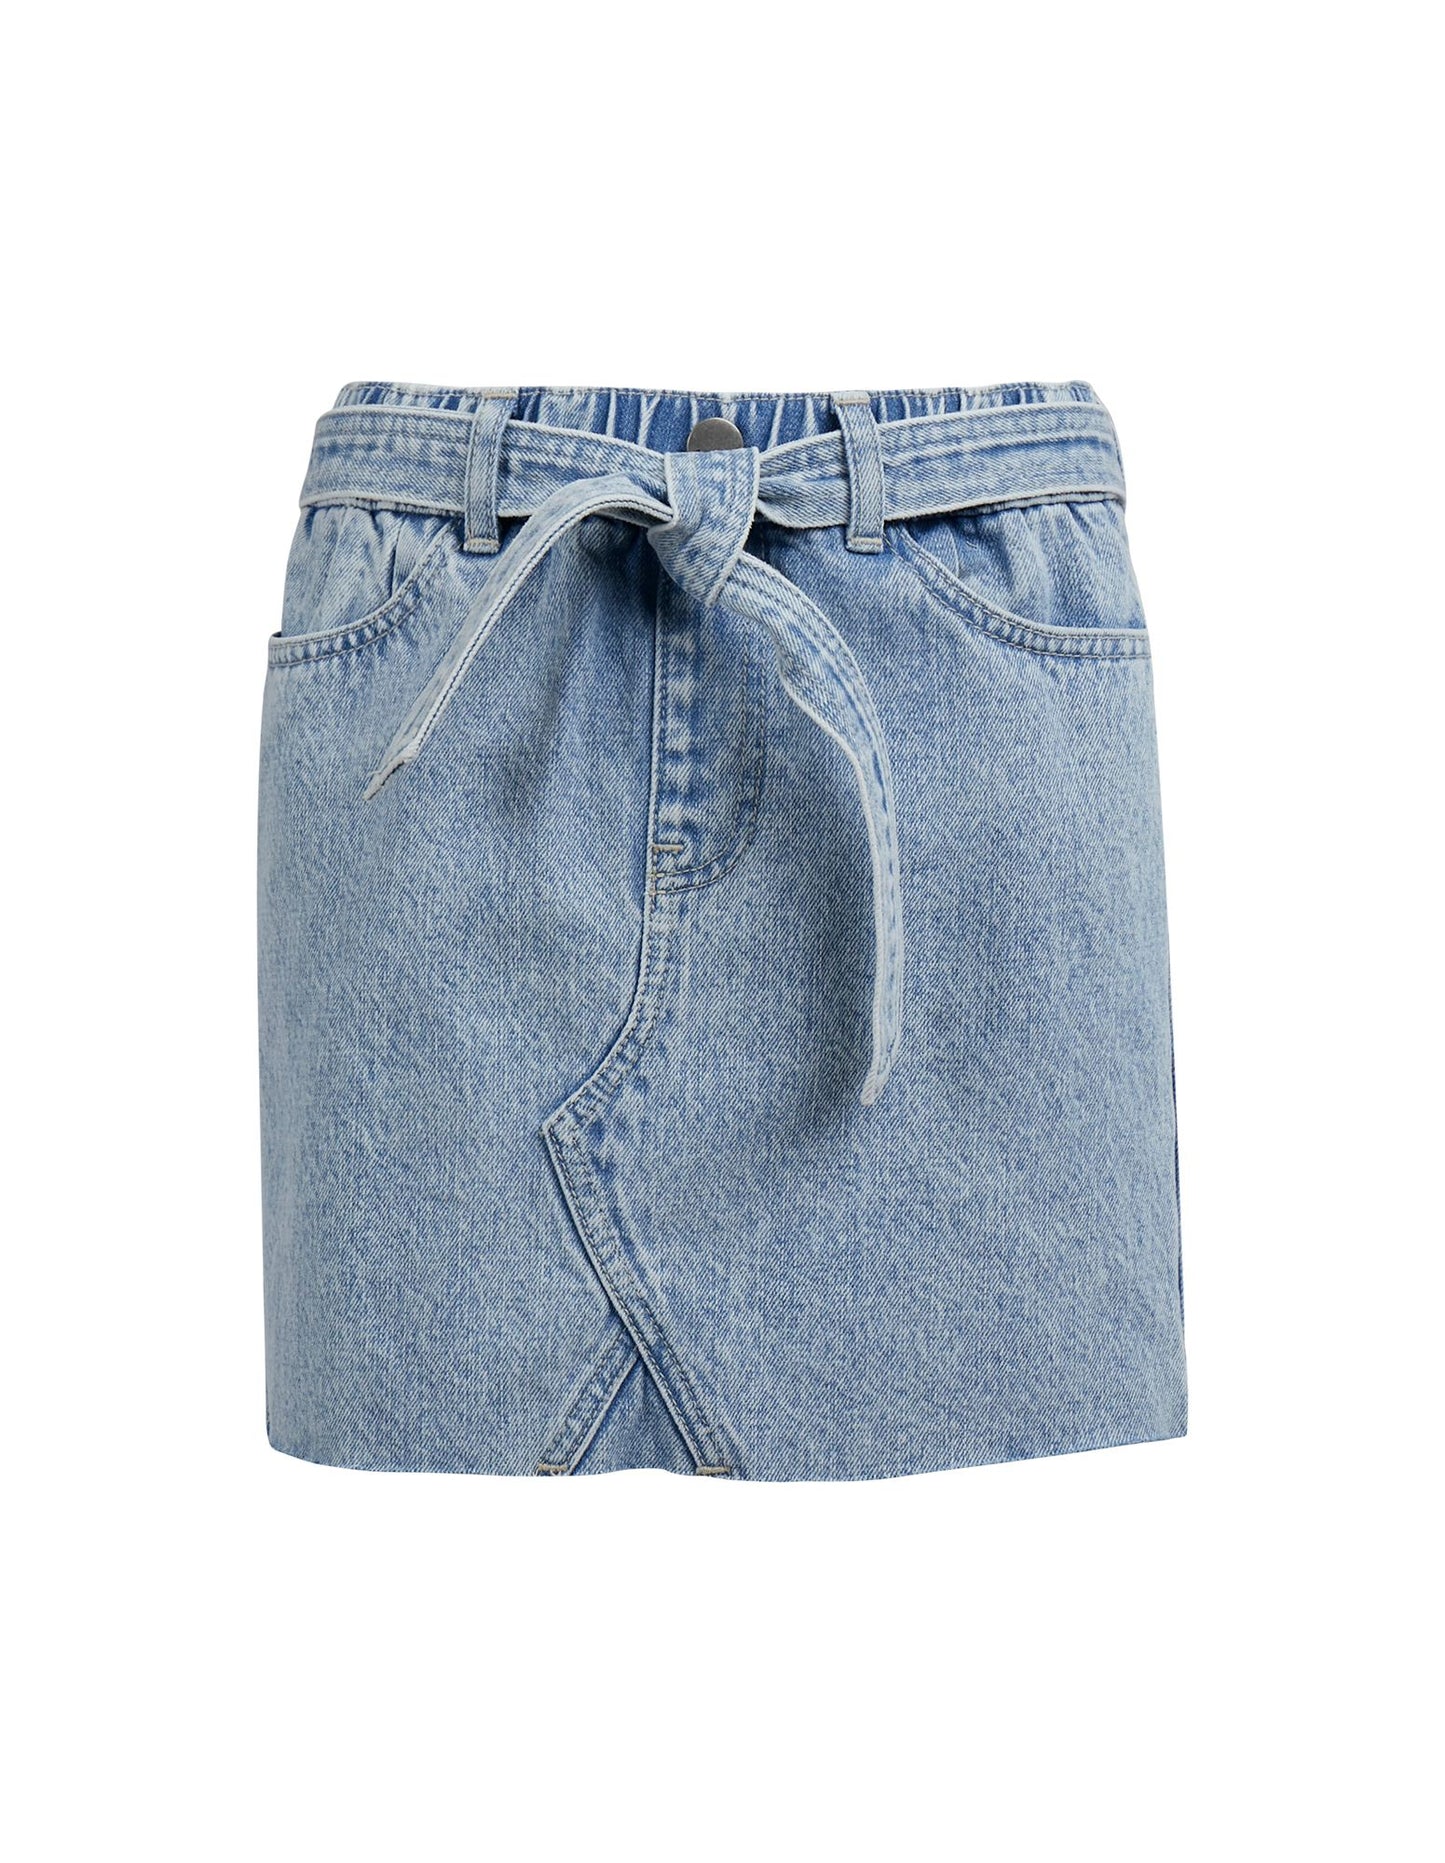 Callie Denim Skirt - Lucky Last! (Size 10)